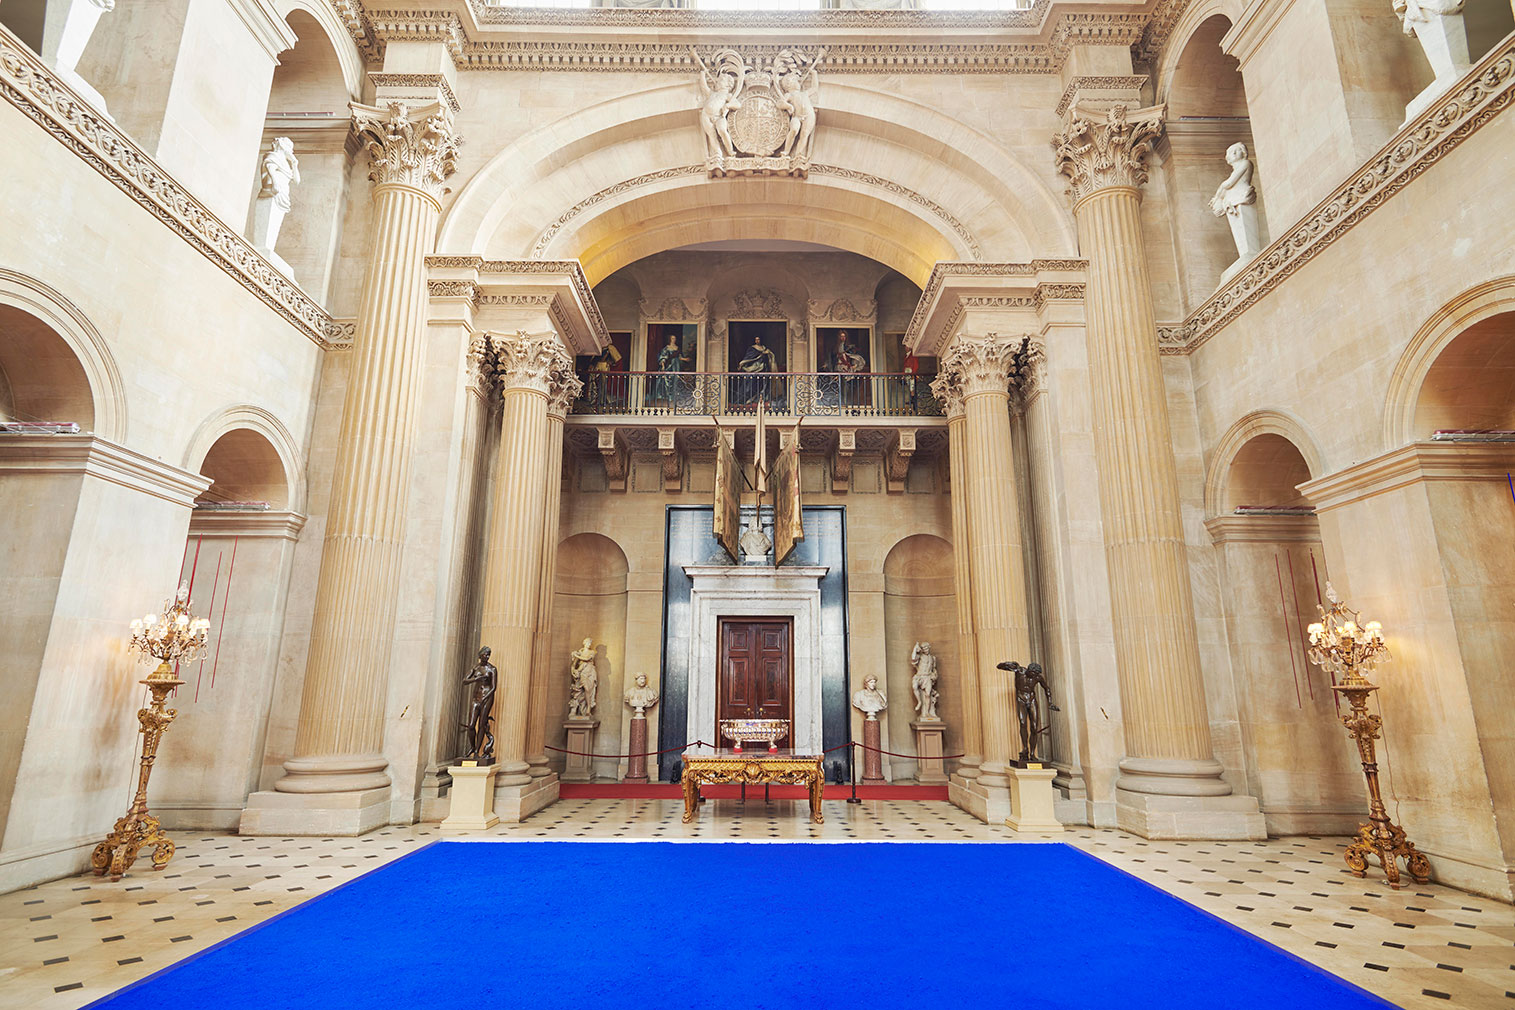 Yves Klein installation at Blenheim Palace